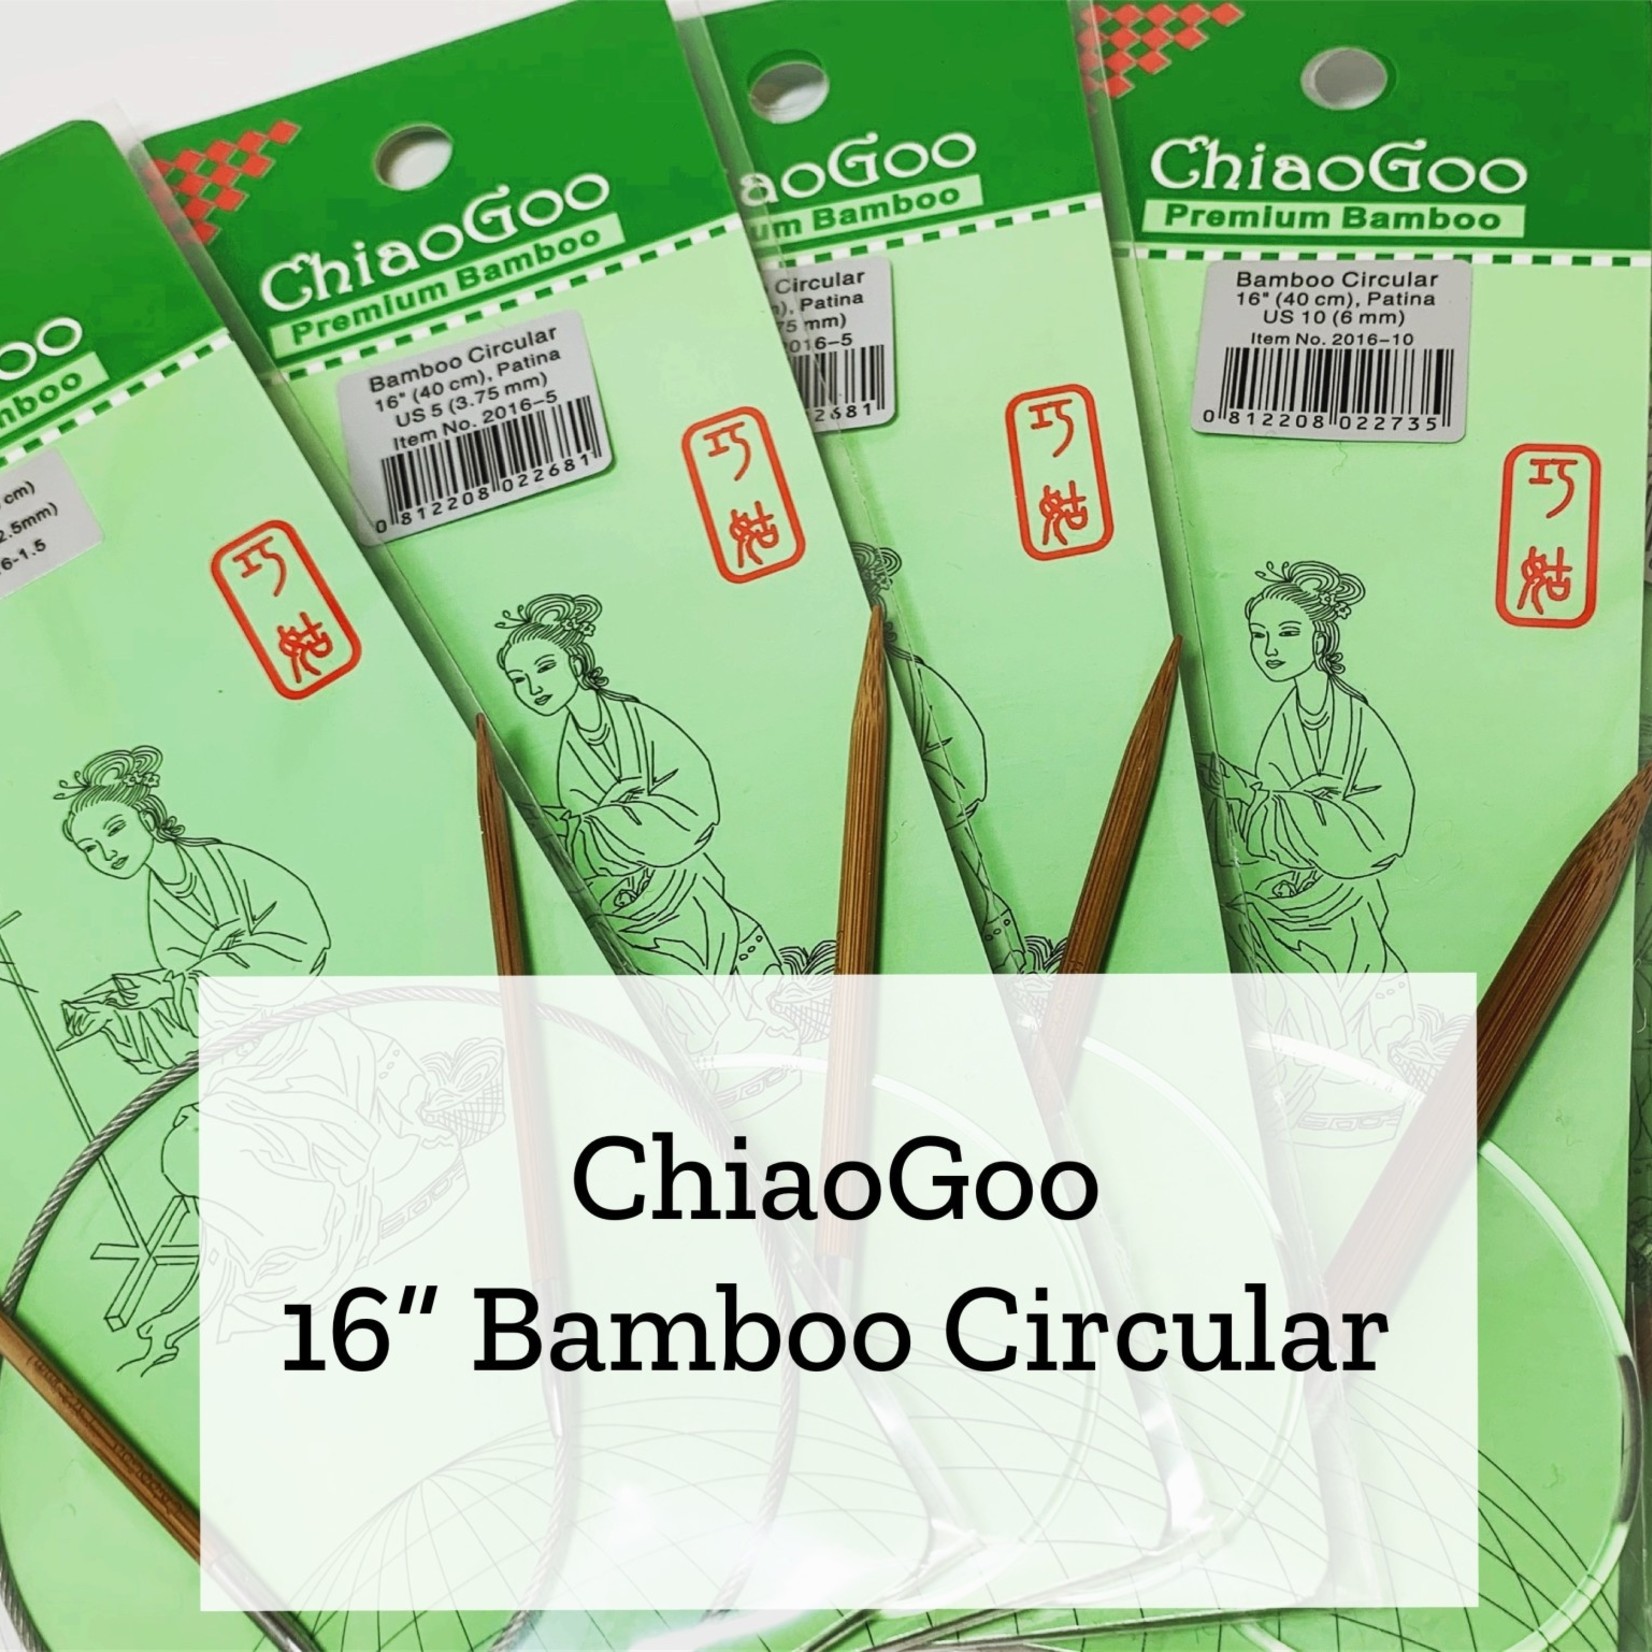 ChiaoGoo Bamboo Circular 16" 5mm